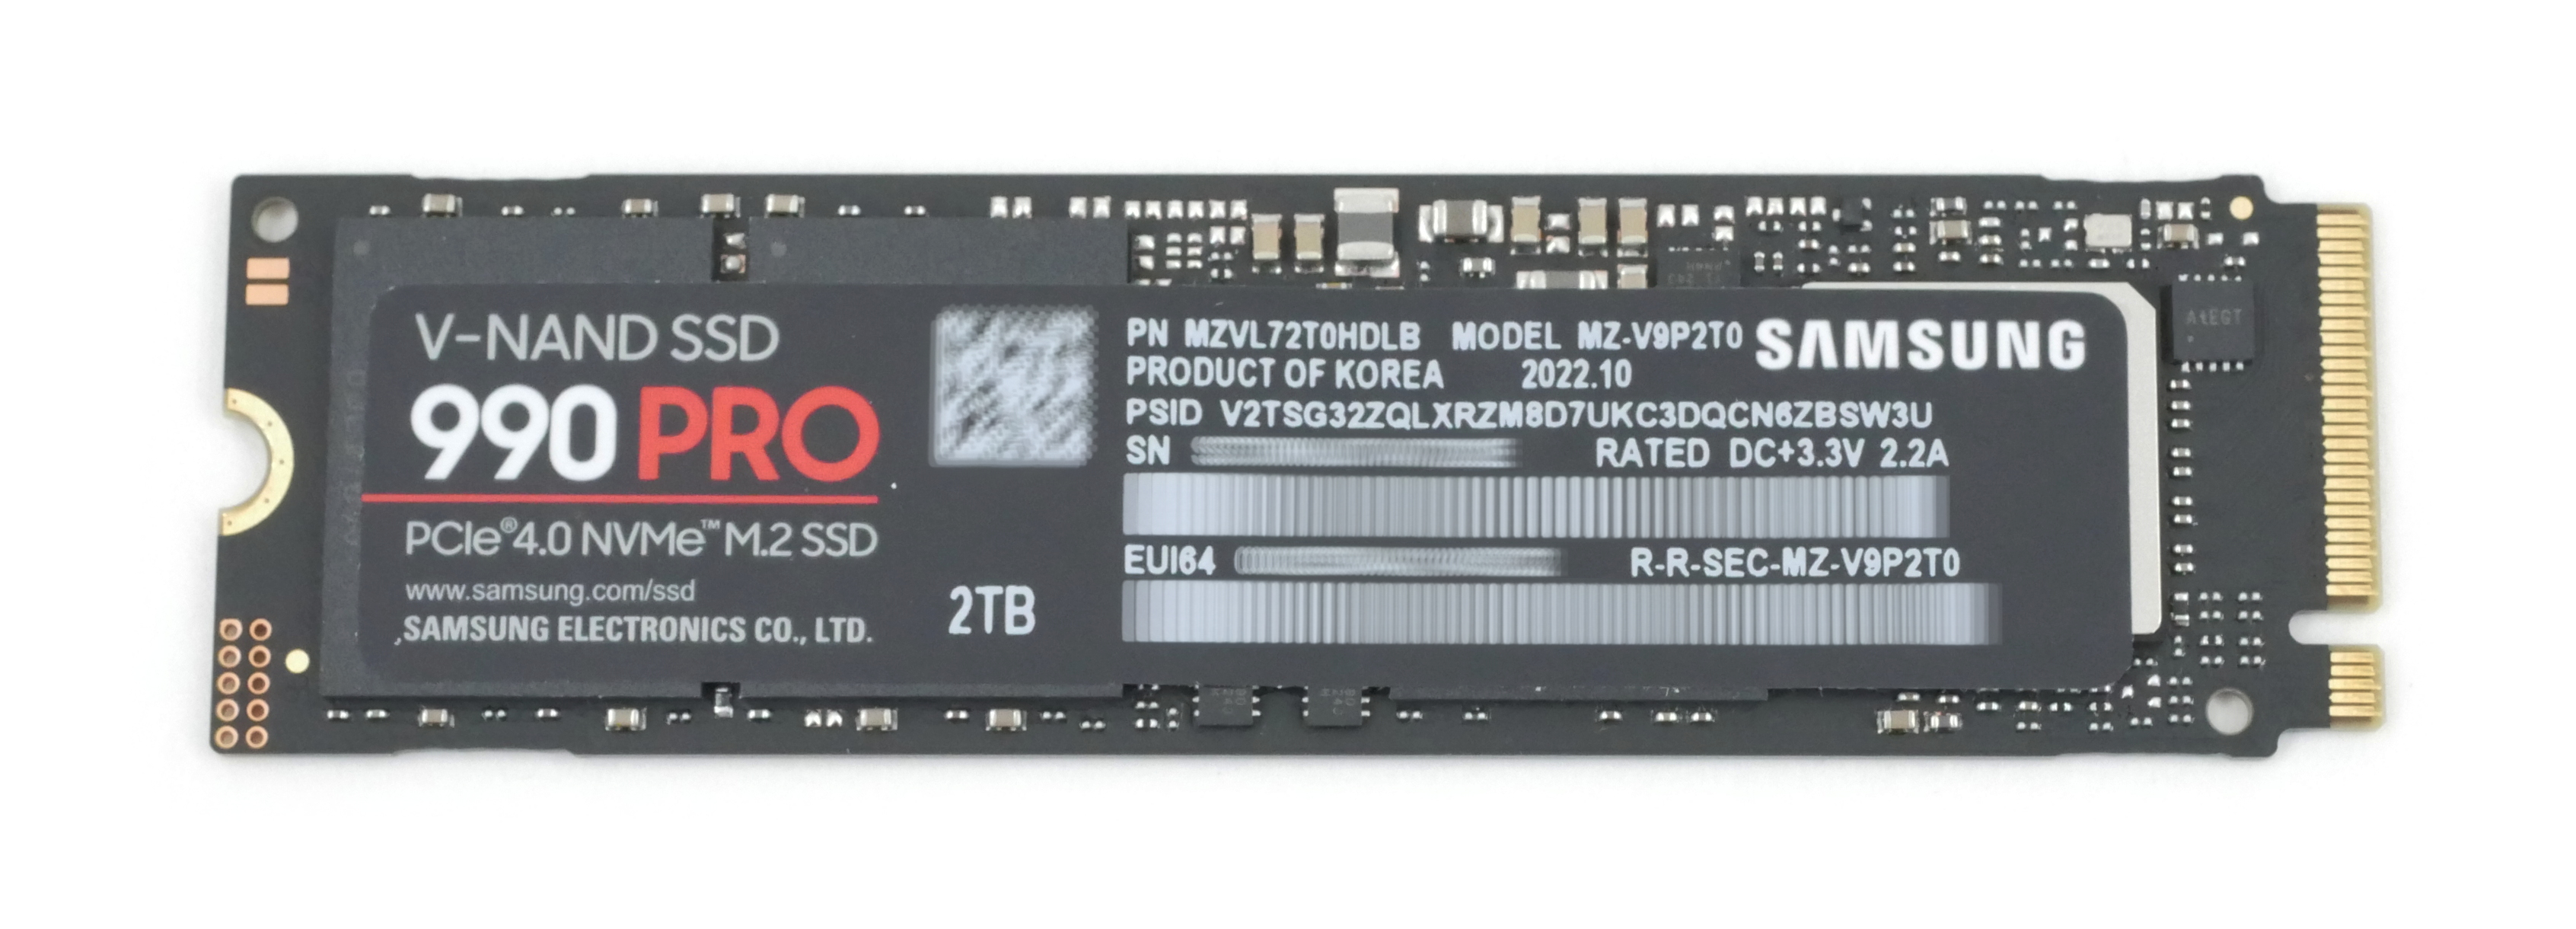 Samsung 990 Pro 2TB MZ-V9P2T0B V-NAND SSD M.2 2280 PCIe 4.0 x4 NVMe MZVL72T0HDLB